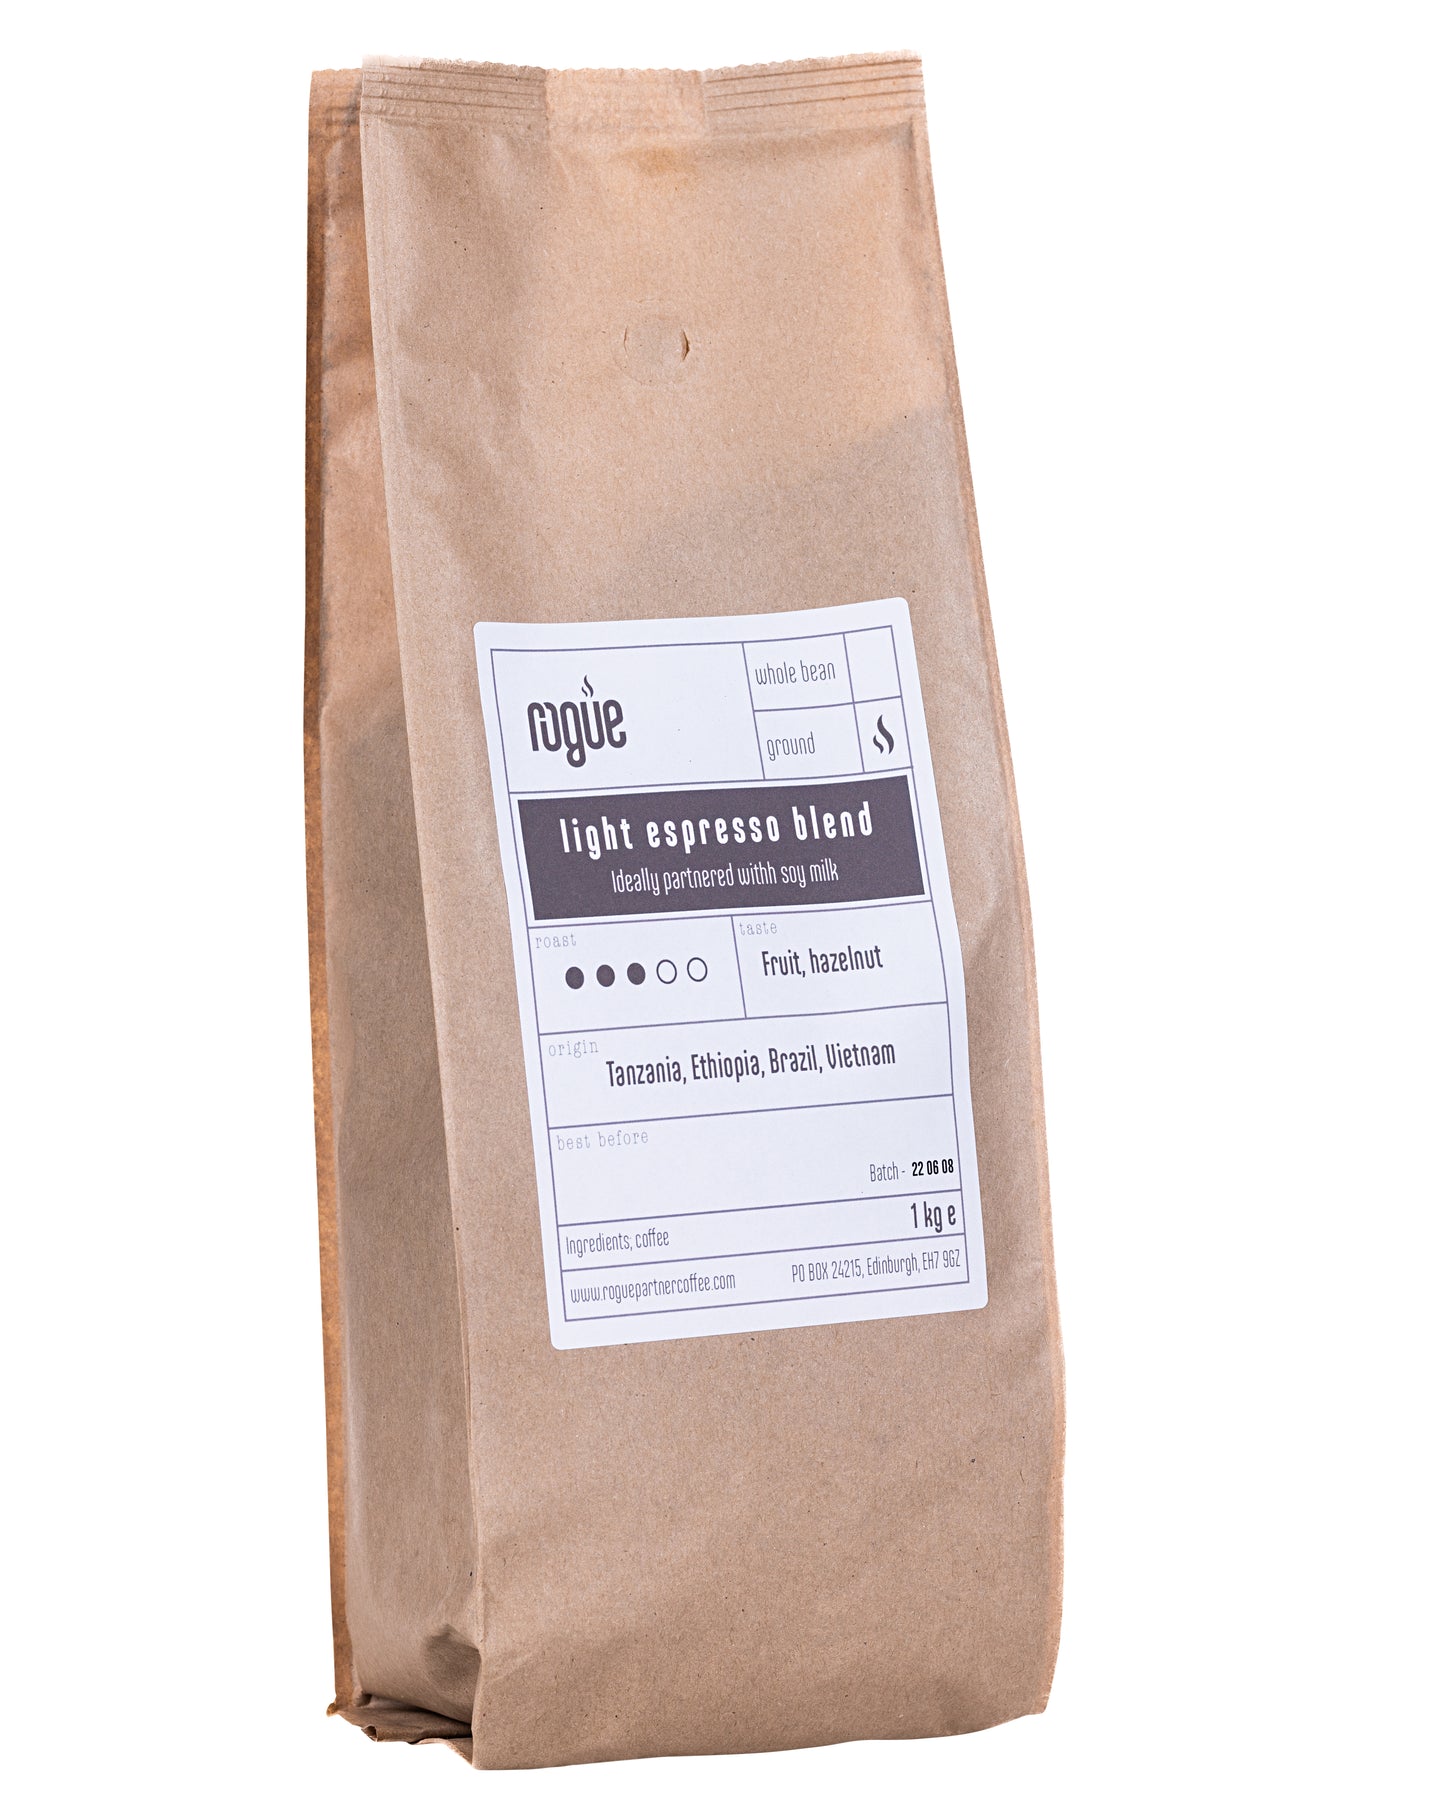 Light roast coffee espresso blend | ground 1kg | ideally partnered with soy milk